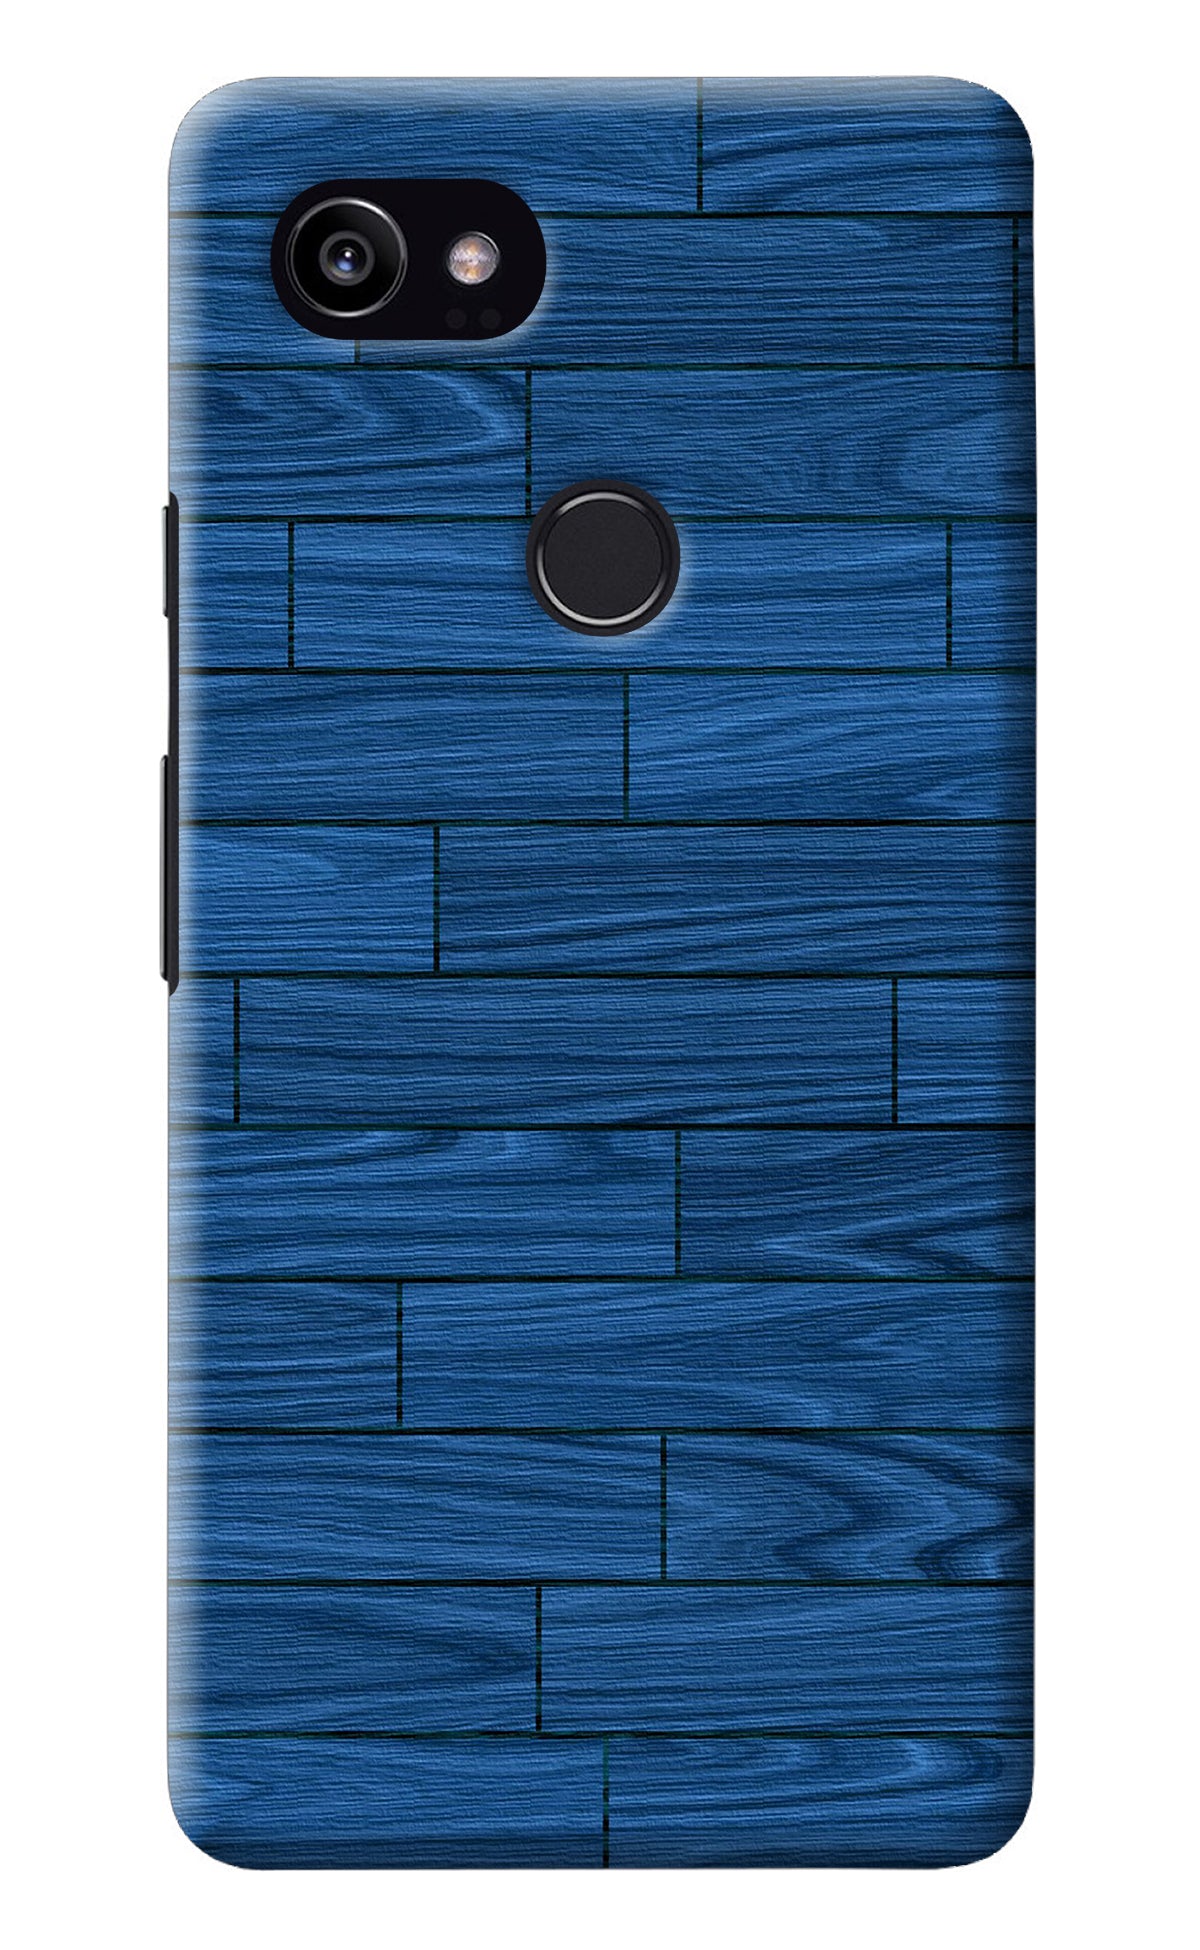 Wooden Texture Google Pixel 2 XL Back Cover